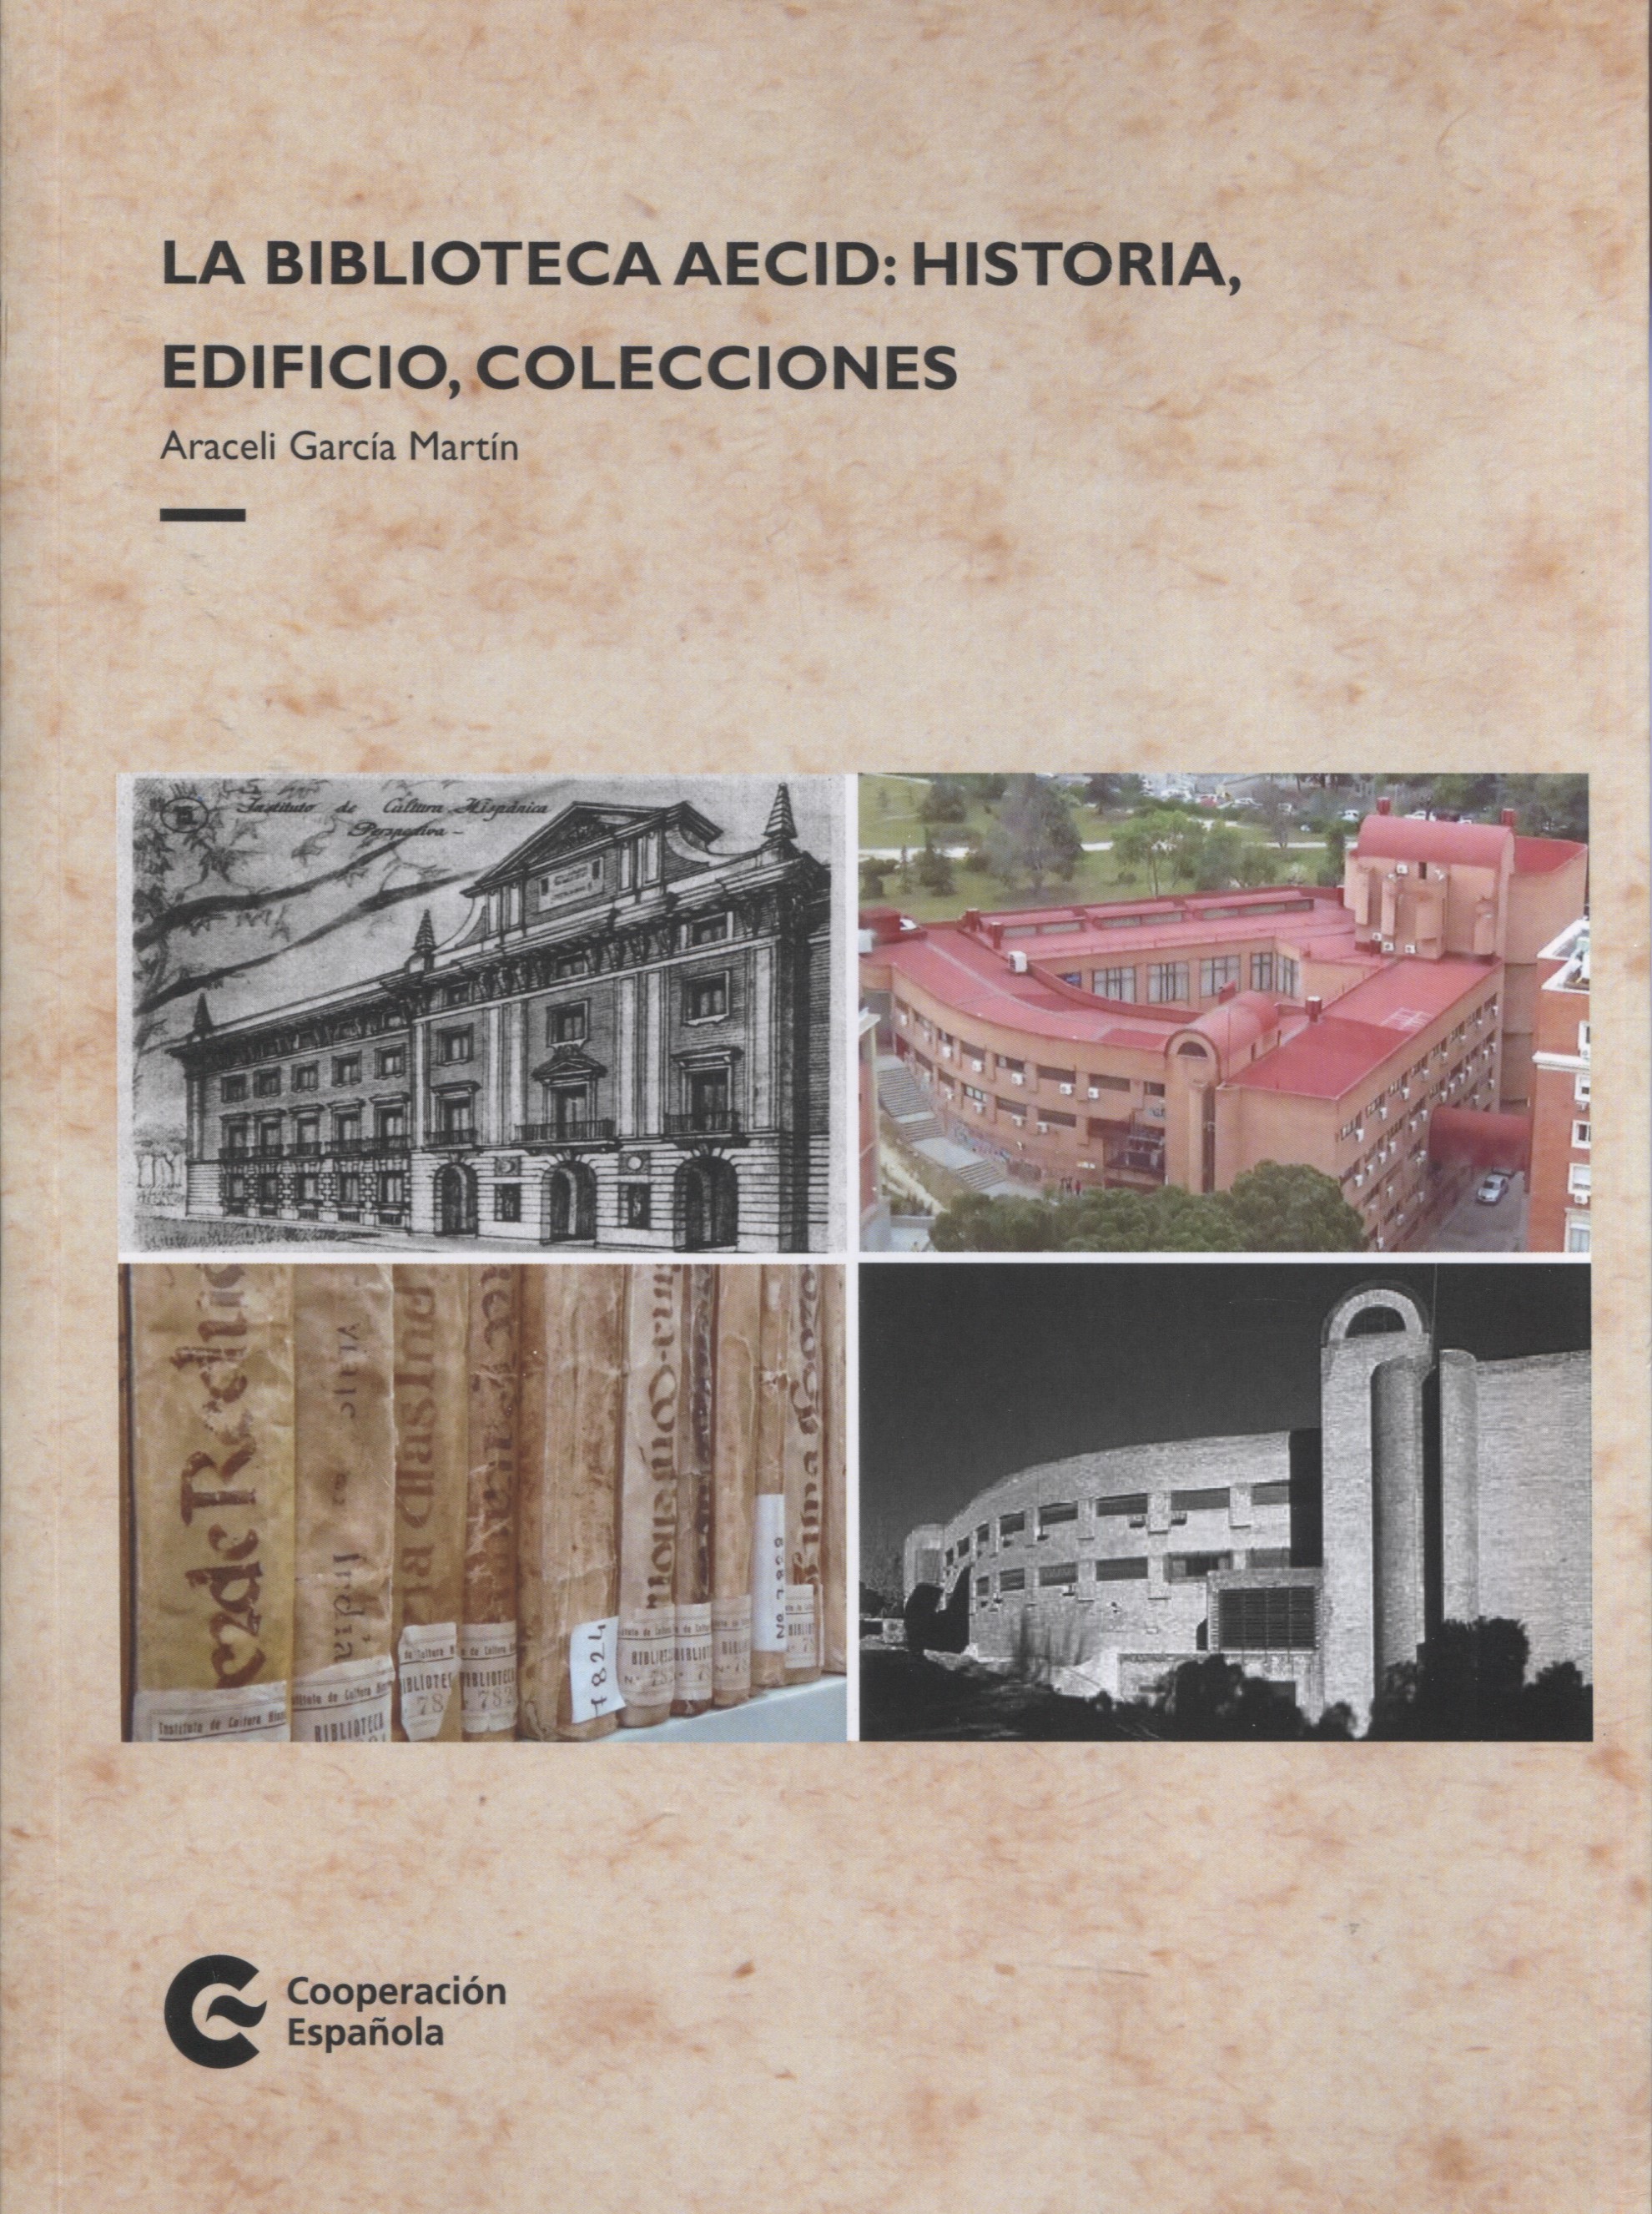 La Biblioteca AECID